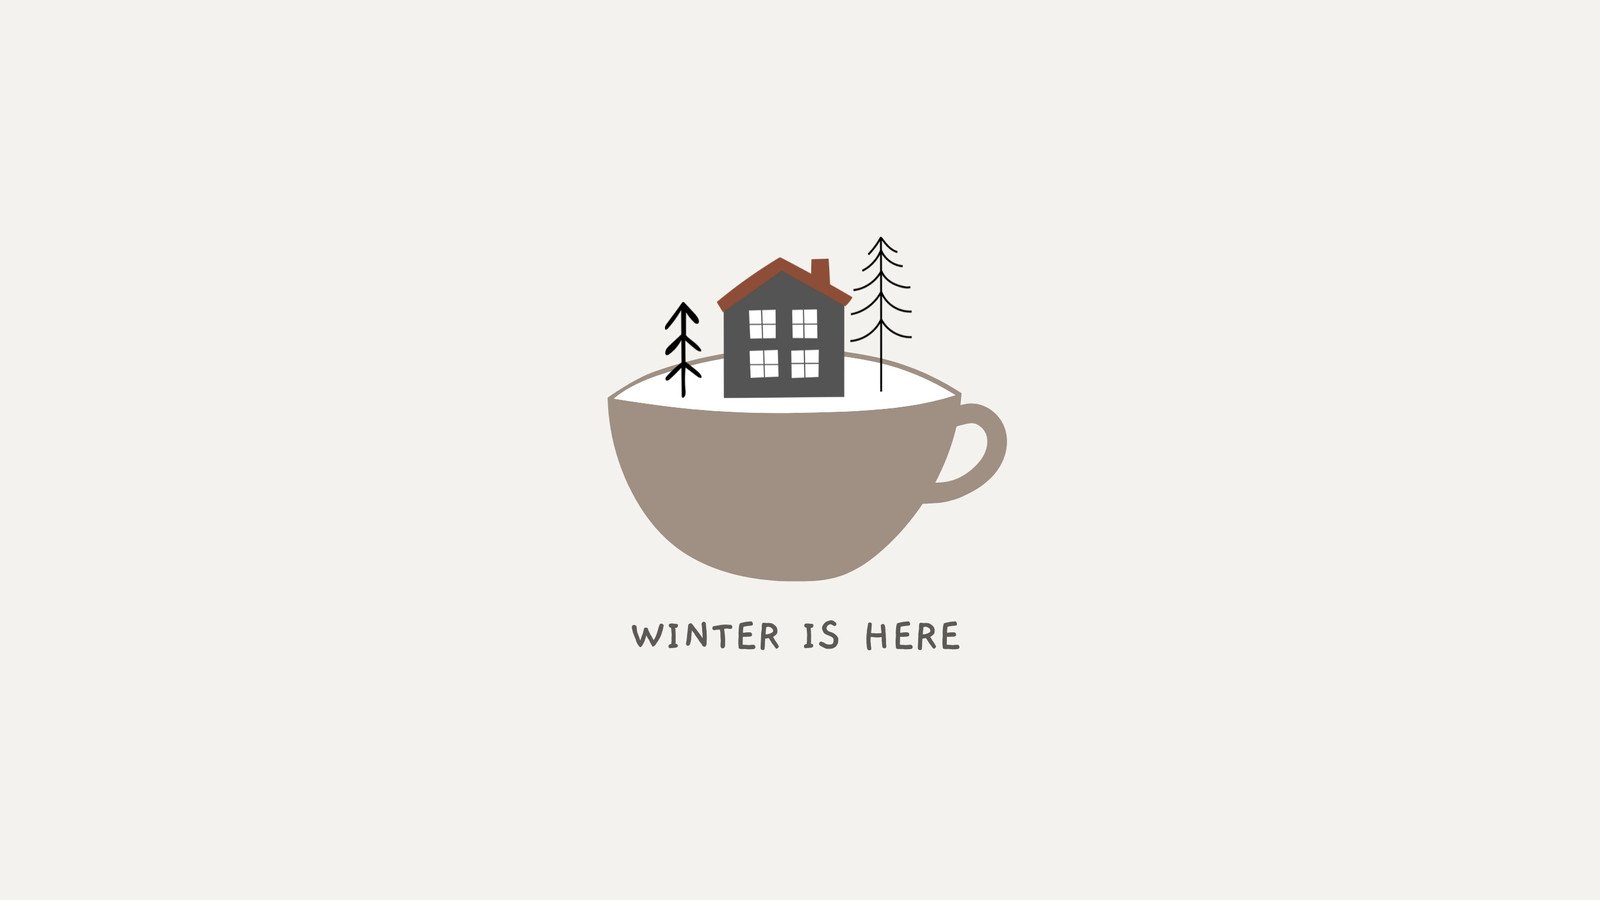 A winter scene in a coffee cup - Cozy